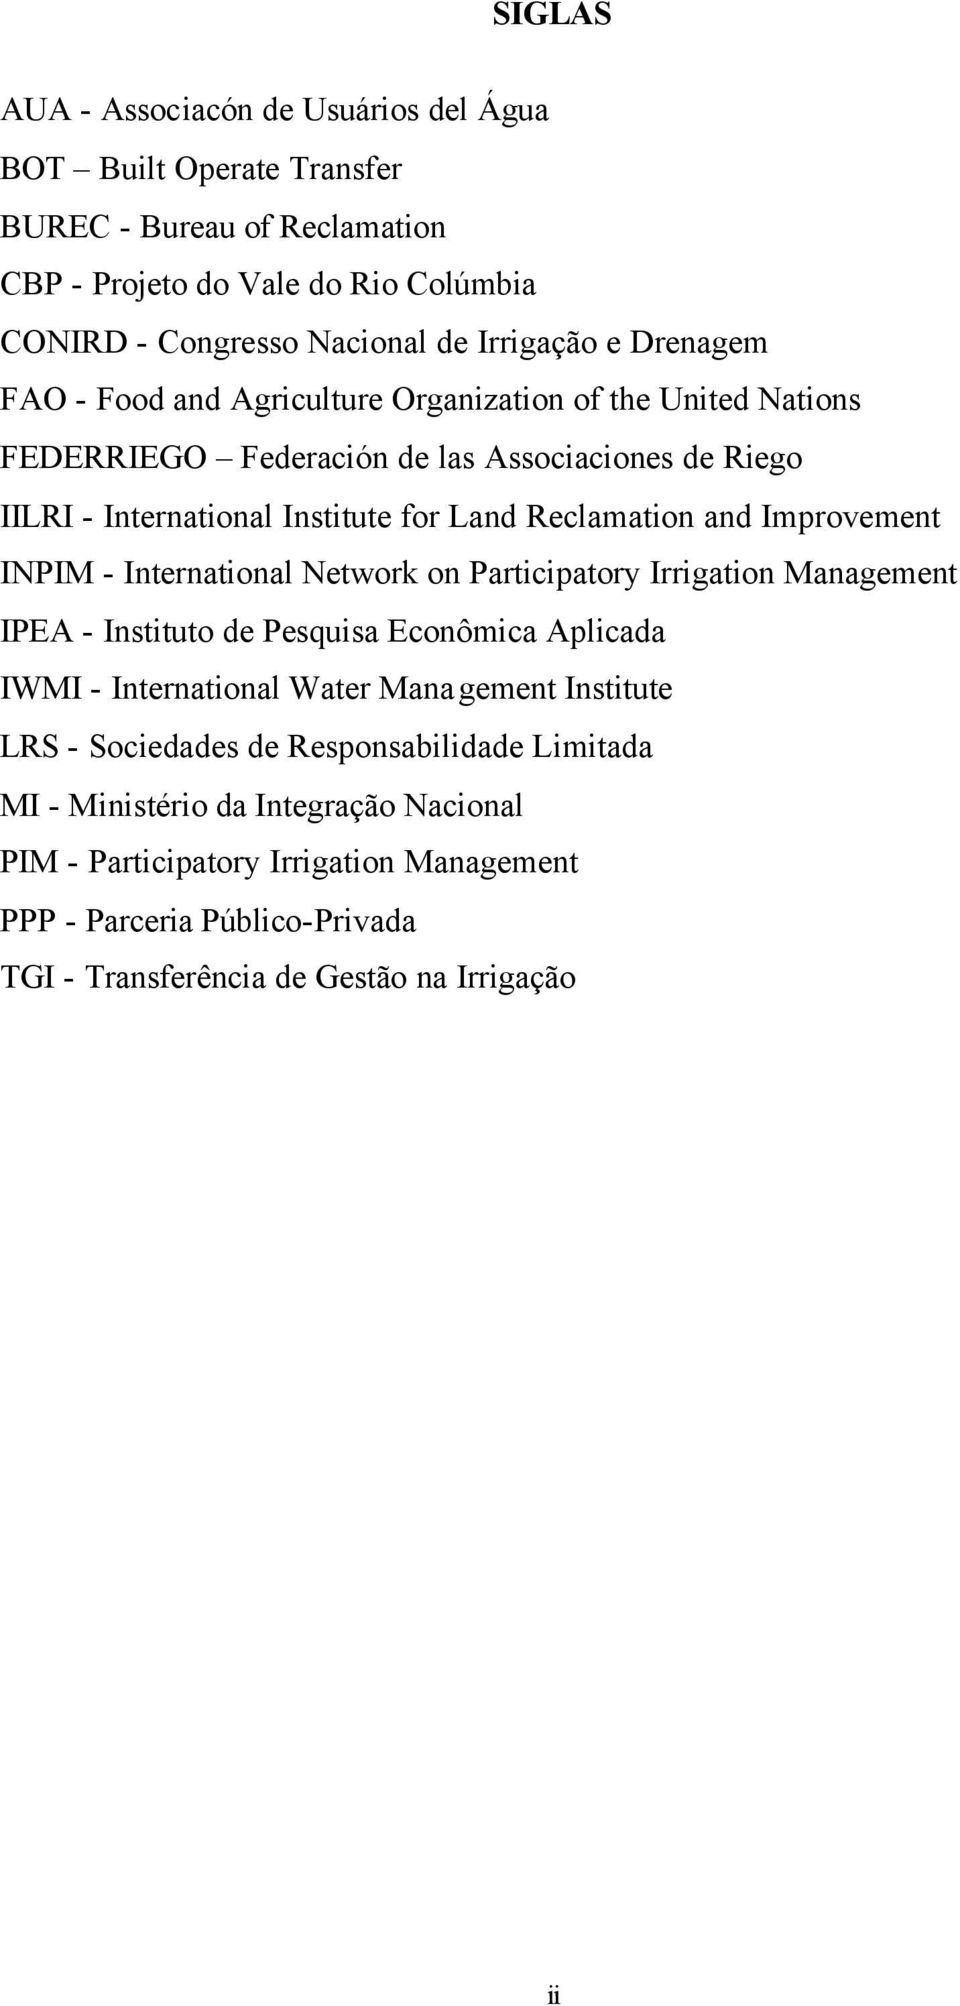 Improvement INPIM - International Network on Participatory Irrigation Management IPEA - Instituto de Pesquisa Econômica Aplicada IWMI - International Water Management Institute LRS -